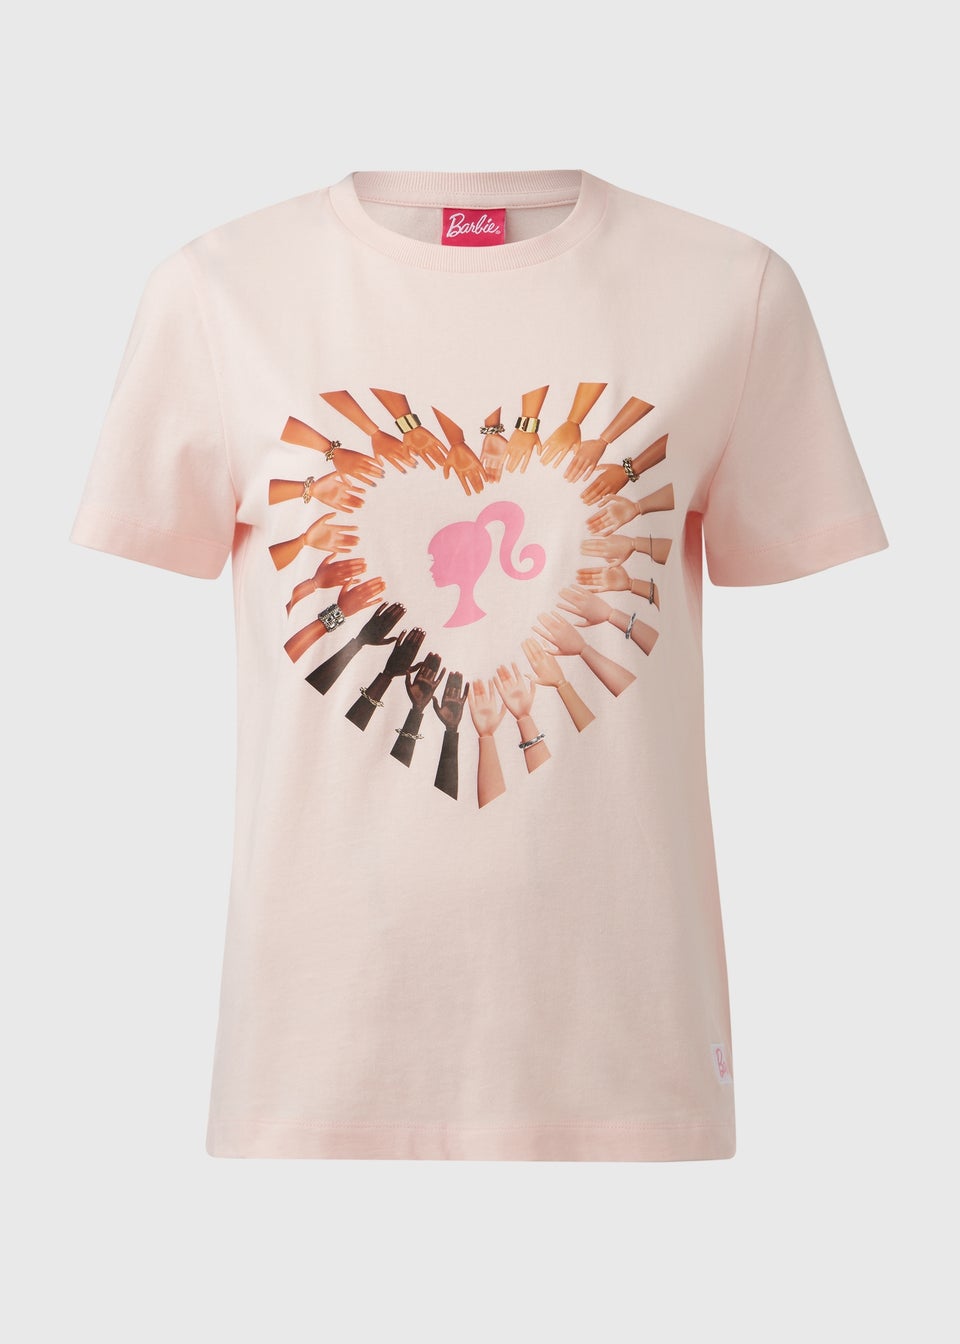 Barbie Pink Hands Print T-Shirt